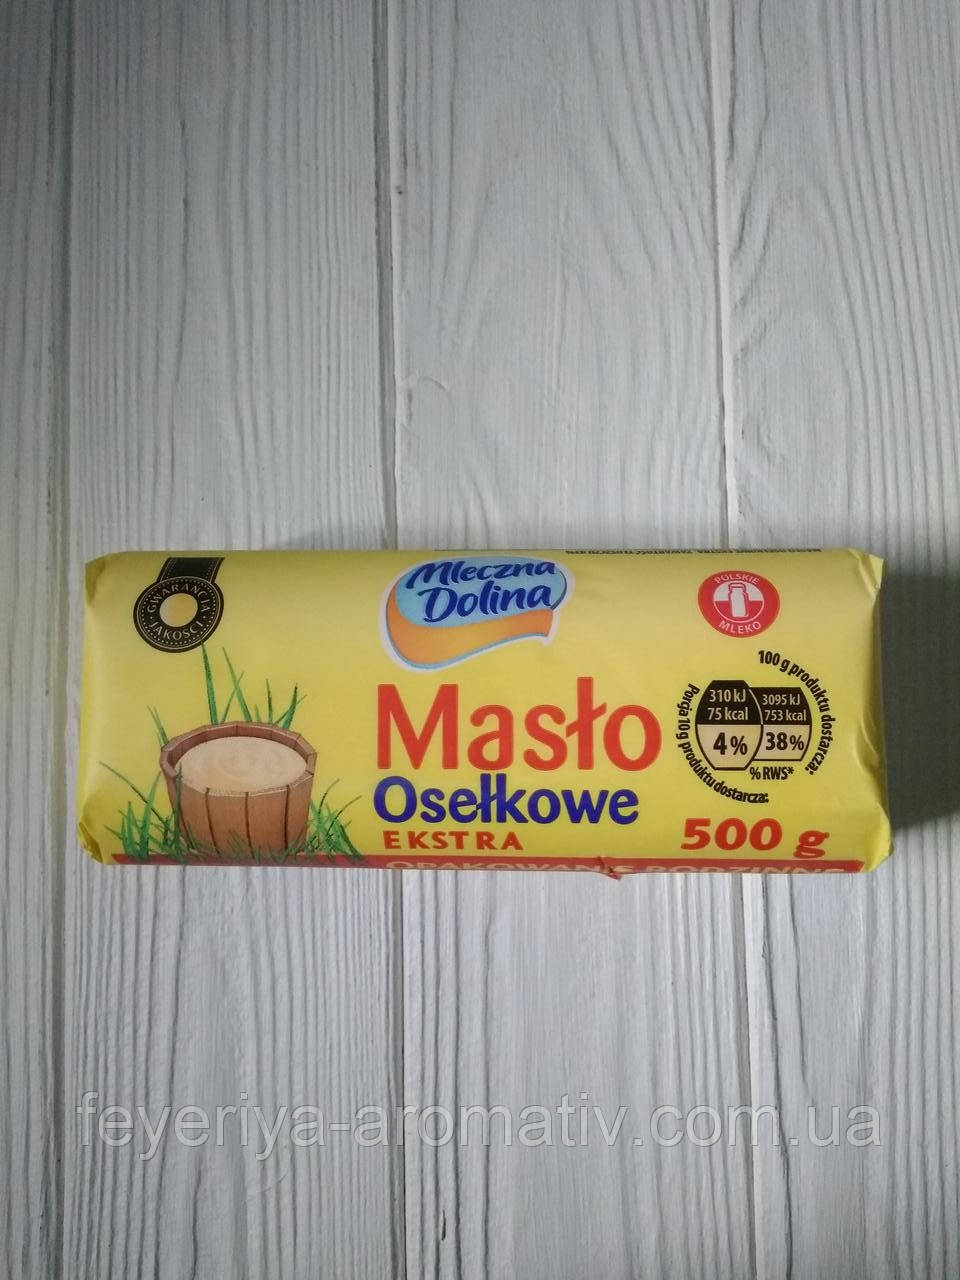 Масло вершкове Mleczna Dolina Maslo Oselkowe extra, 500гр (Польща)